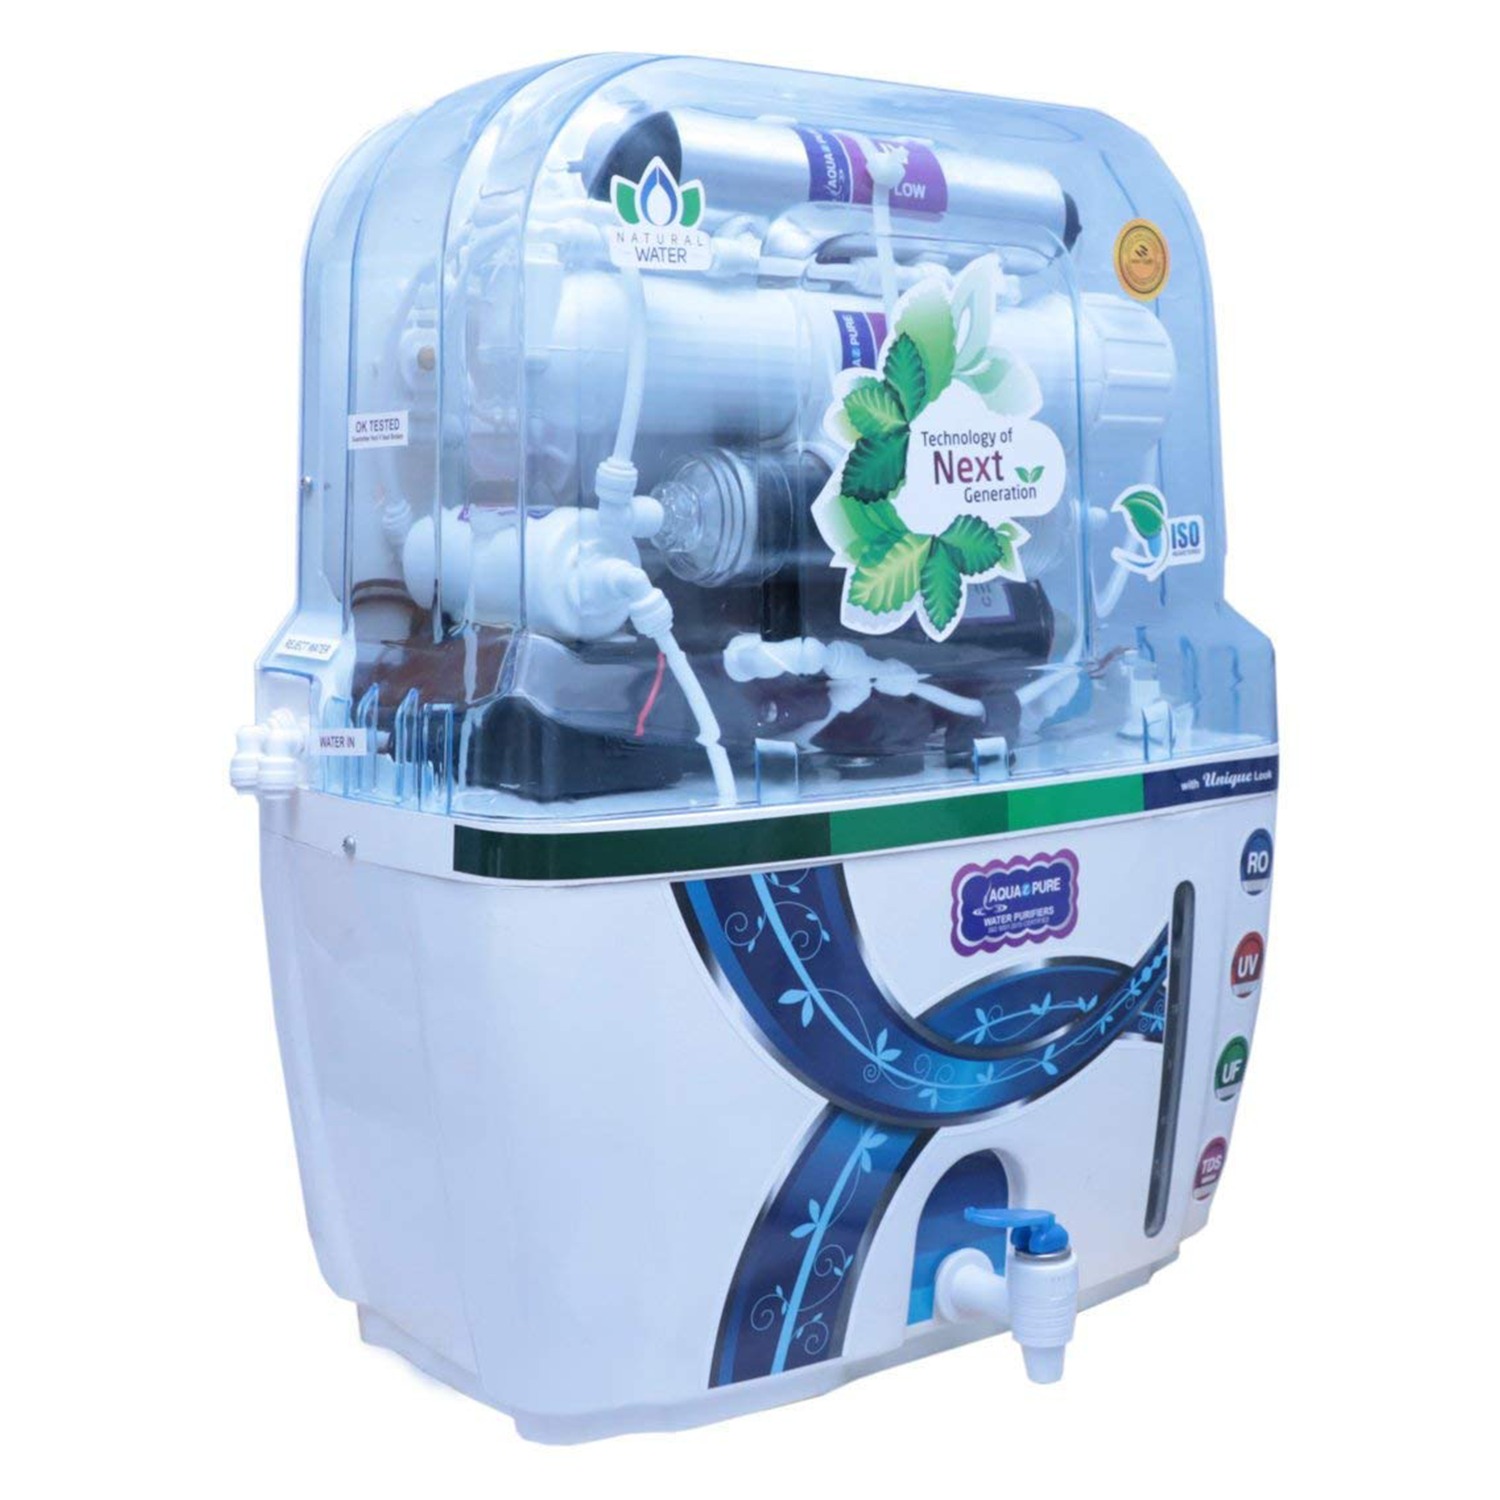 Aqua plus freash 15 Liters RO+UV+UF+TDS Adjuster Water Purifier full kit